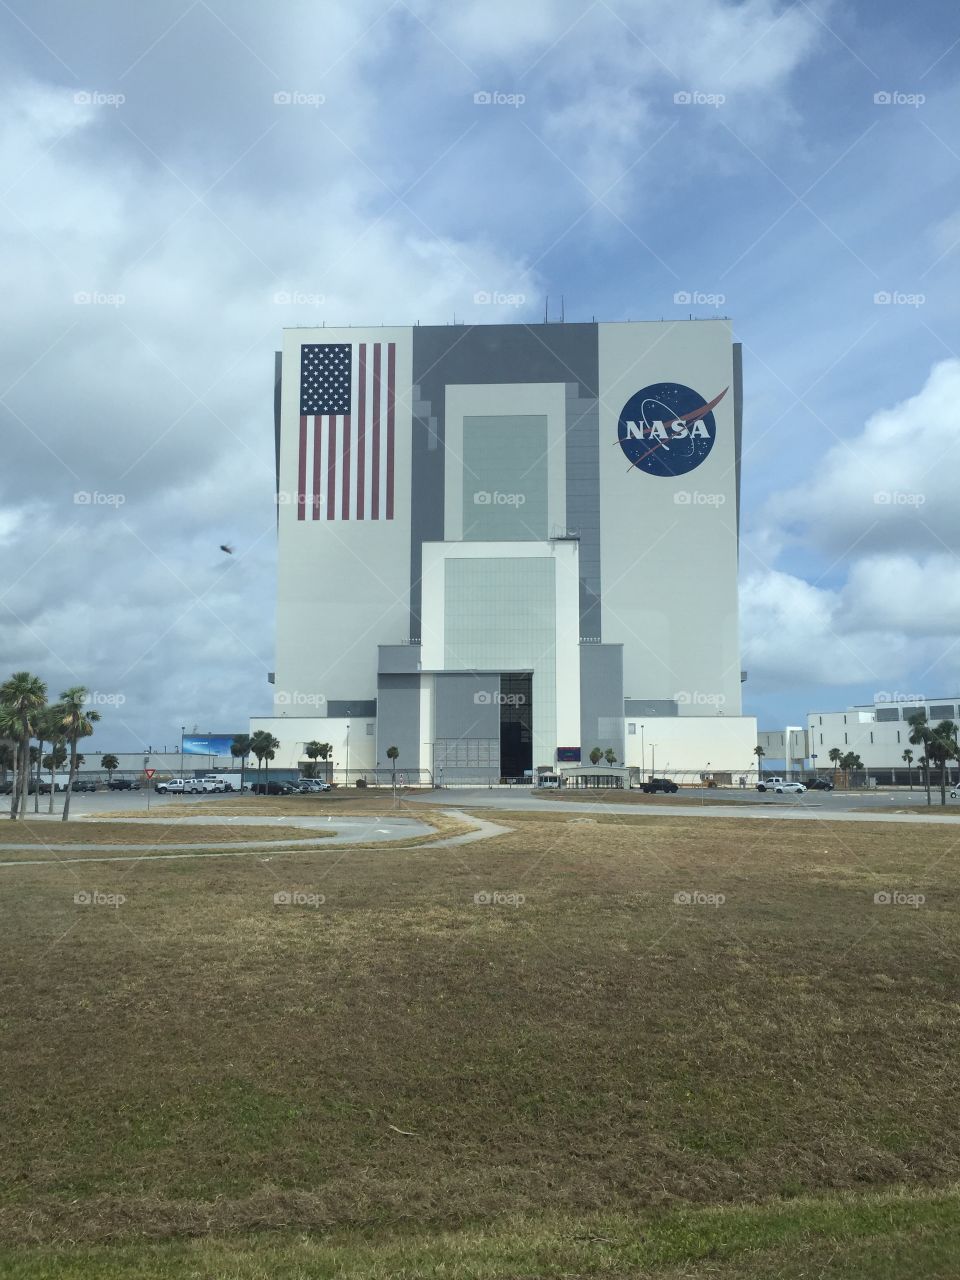 Nasa launch building 